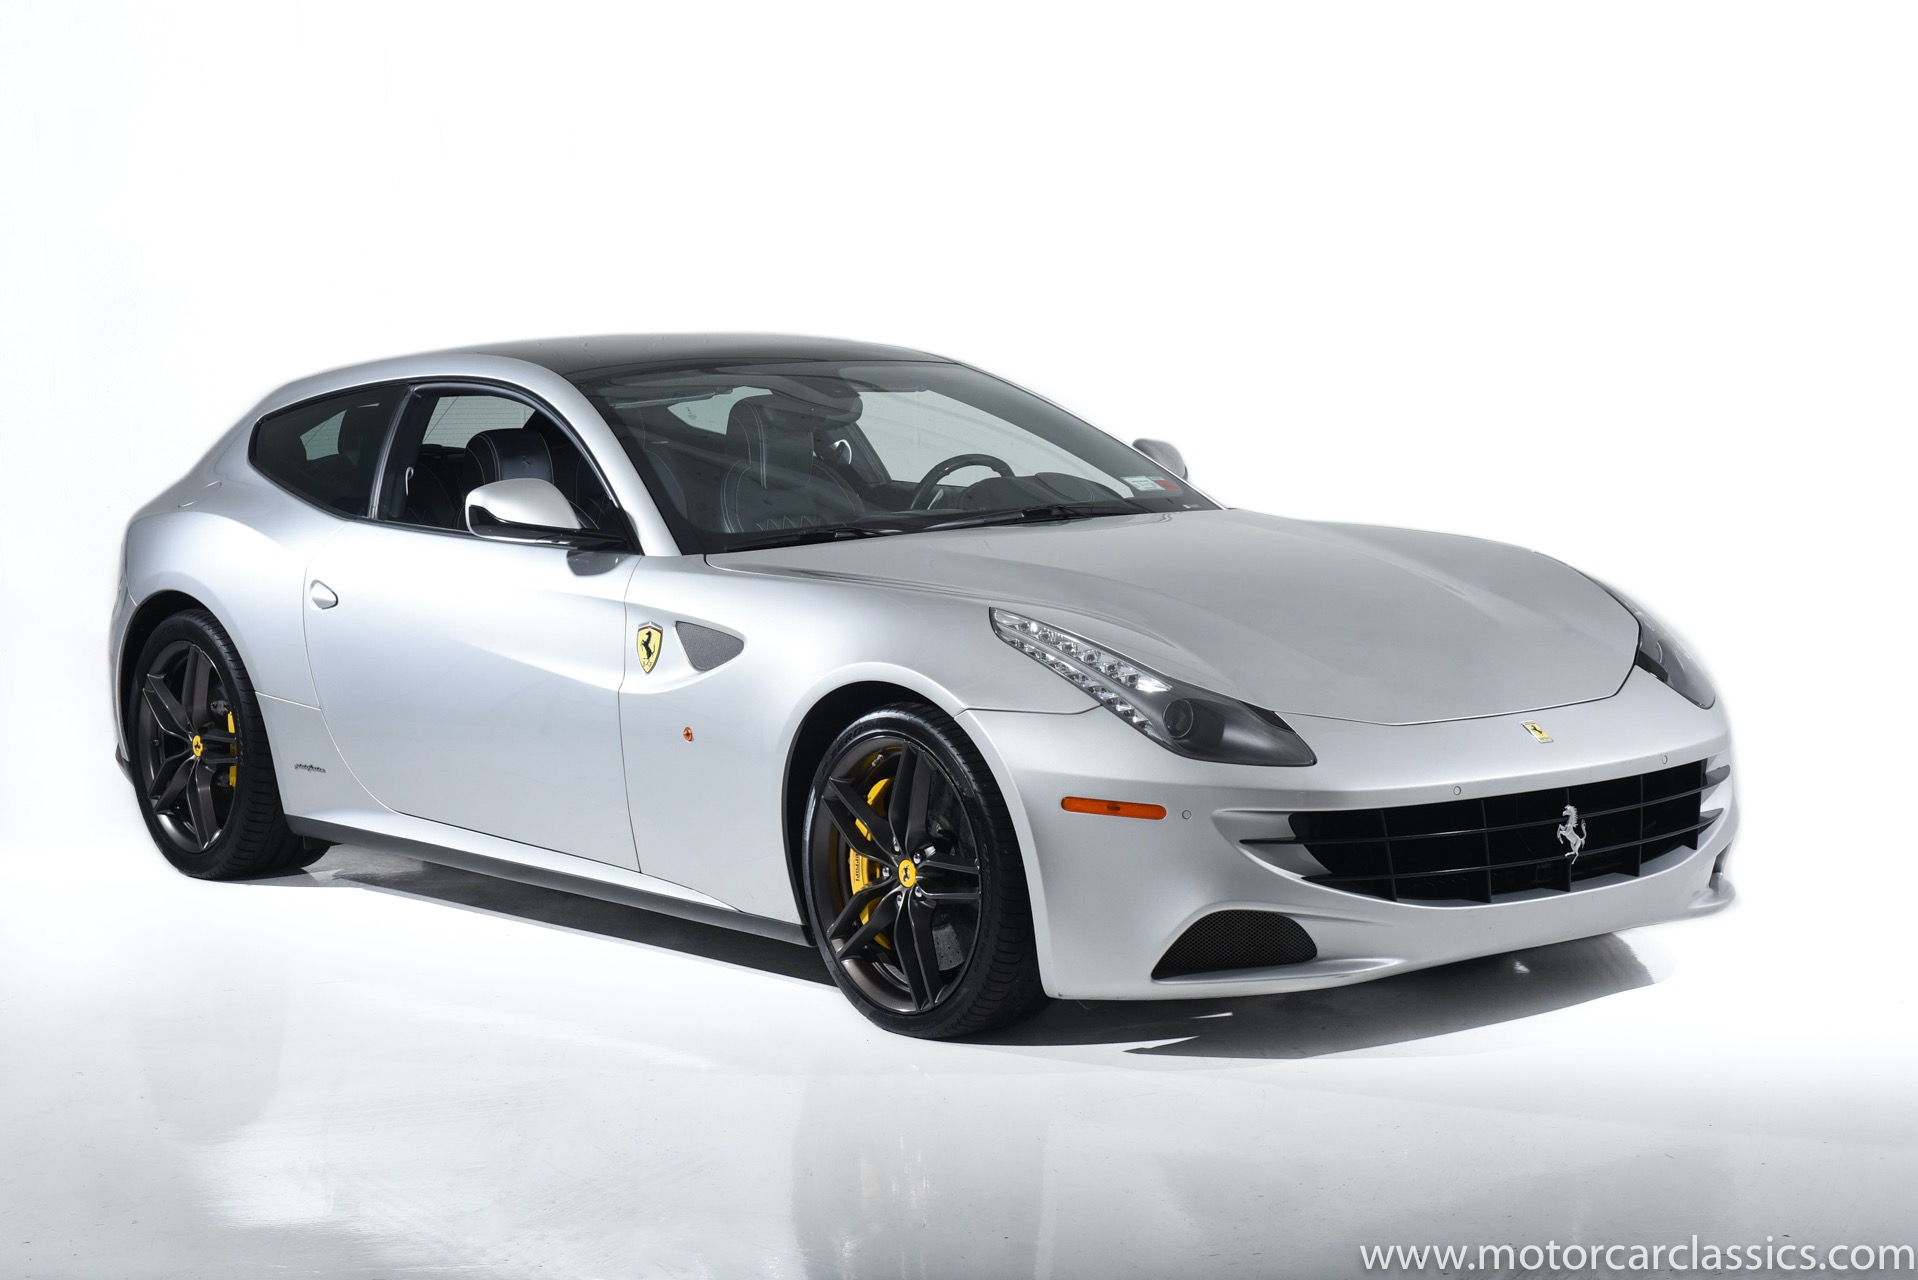 Used 2014 Ferrari FF For Sale ($154,900) | Motorcar Classics Stock #1574